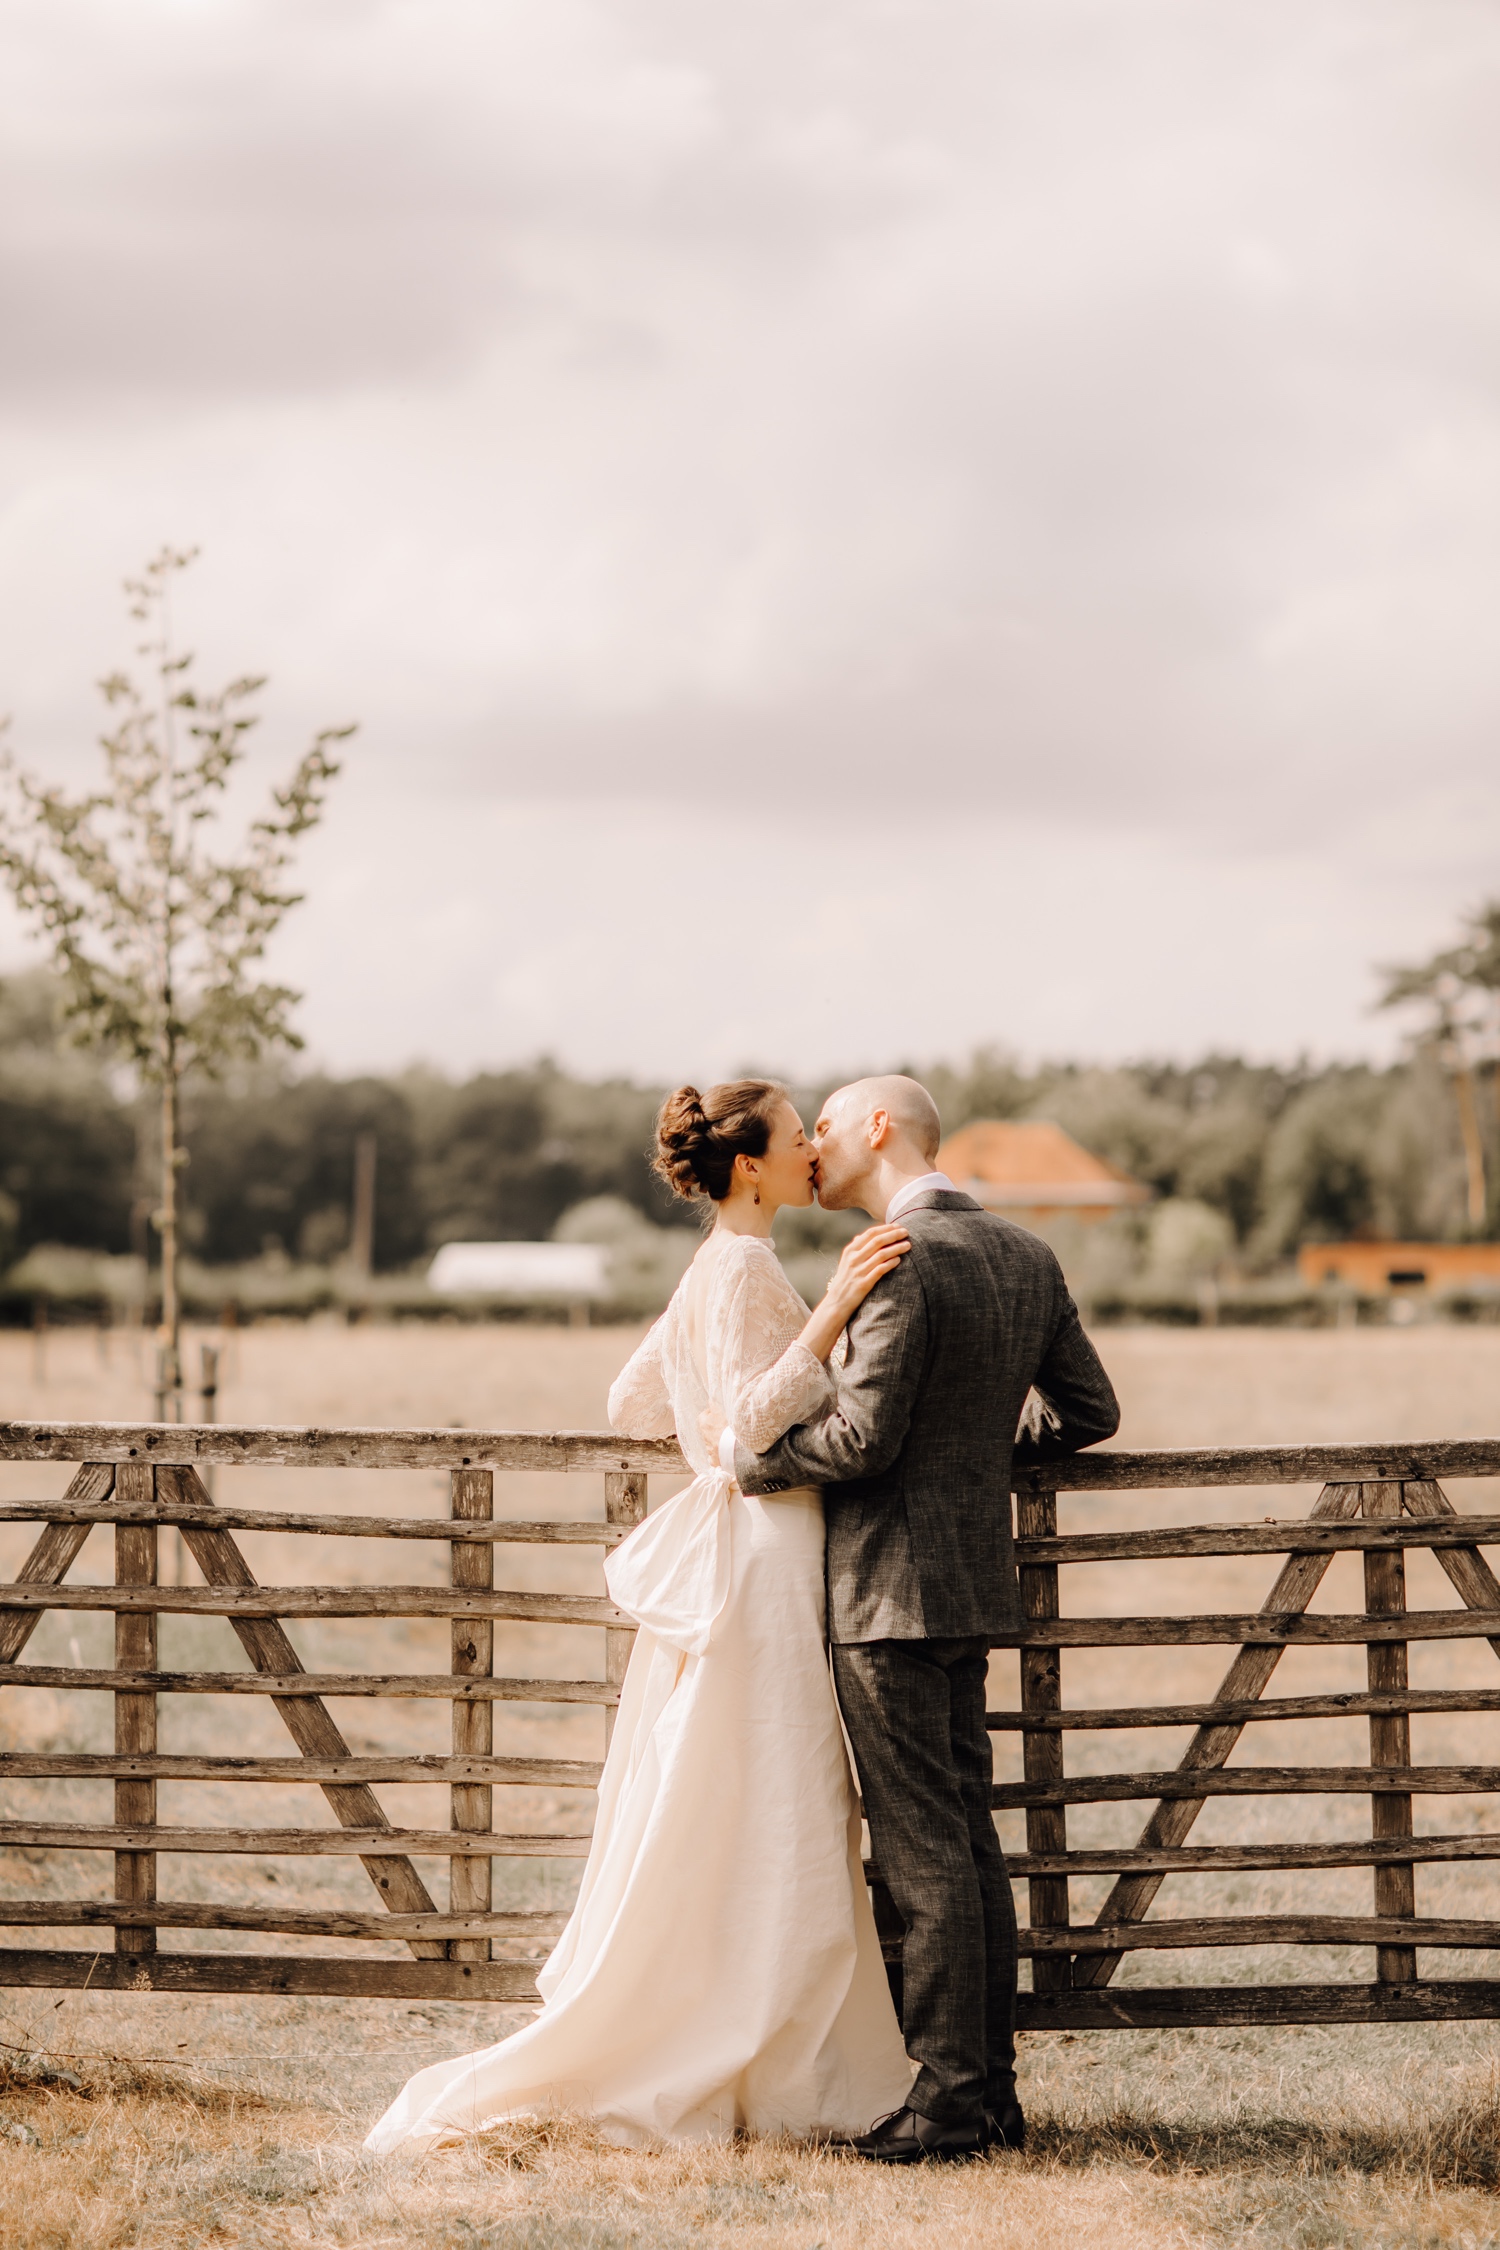 Huwelijksfotograaf Limburg - bruidspaar kust elkaar innig